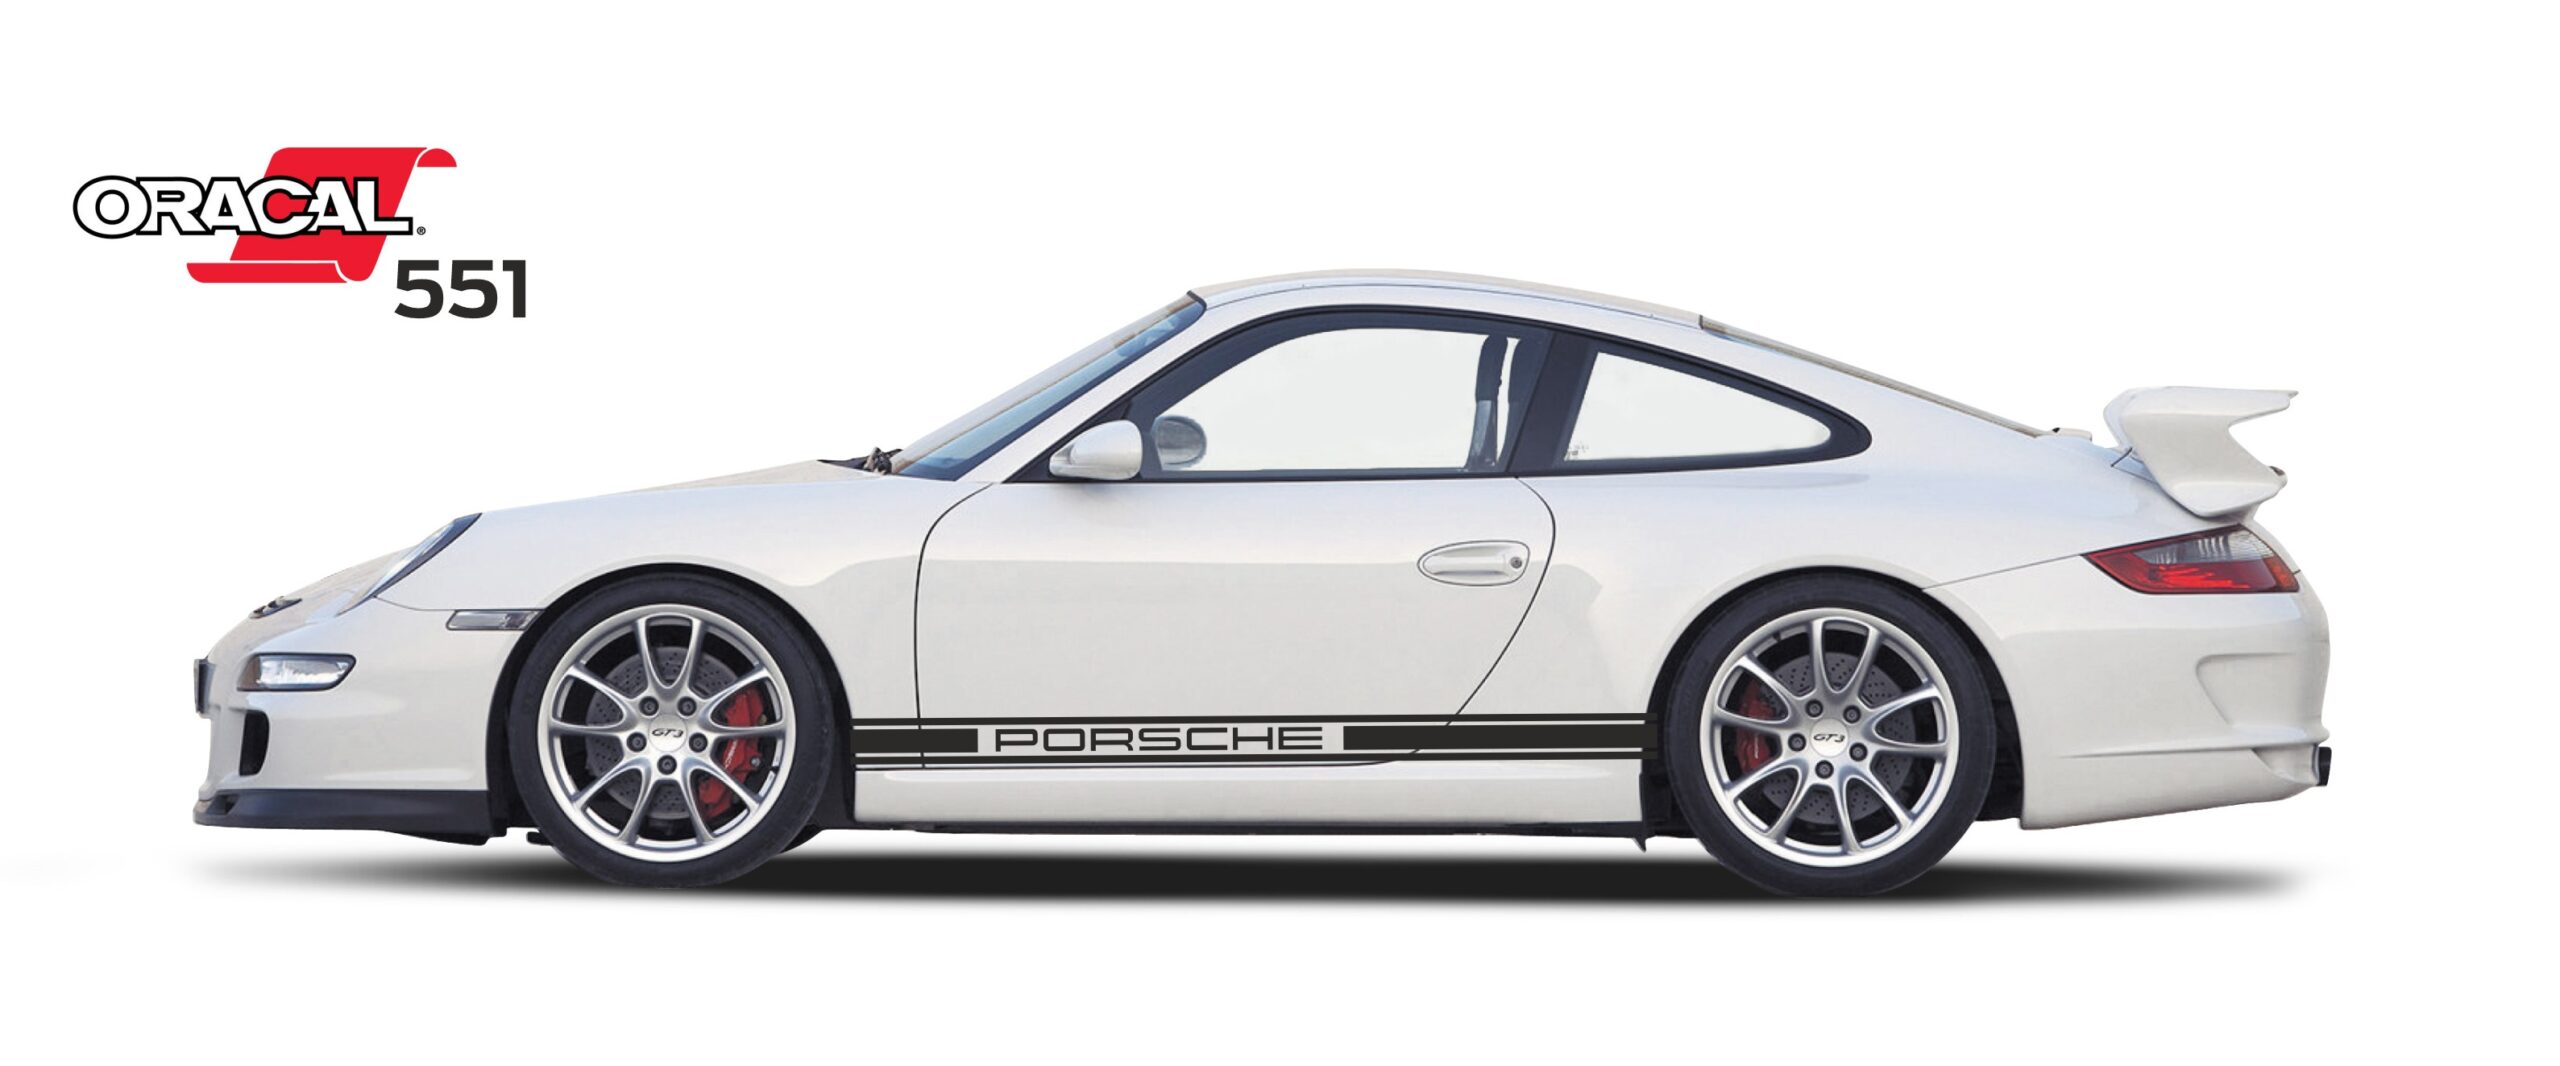 Porsche 911 naklejki 02 decals stripes sticker aufkleber nalepky samolepky tuning